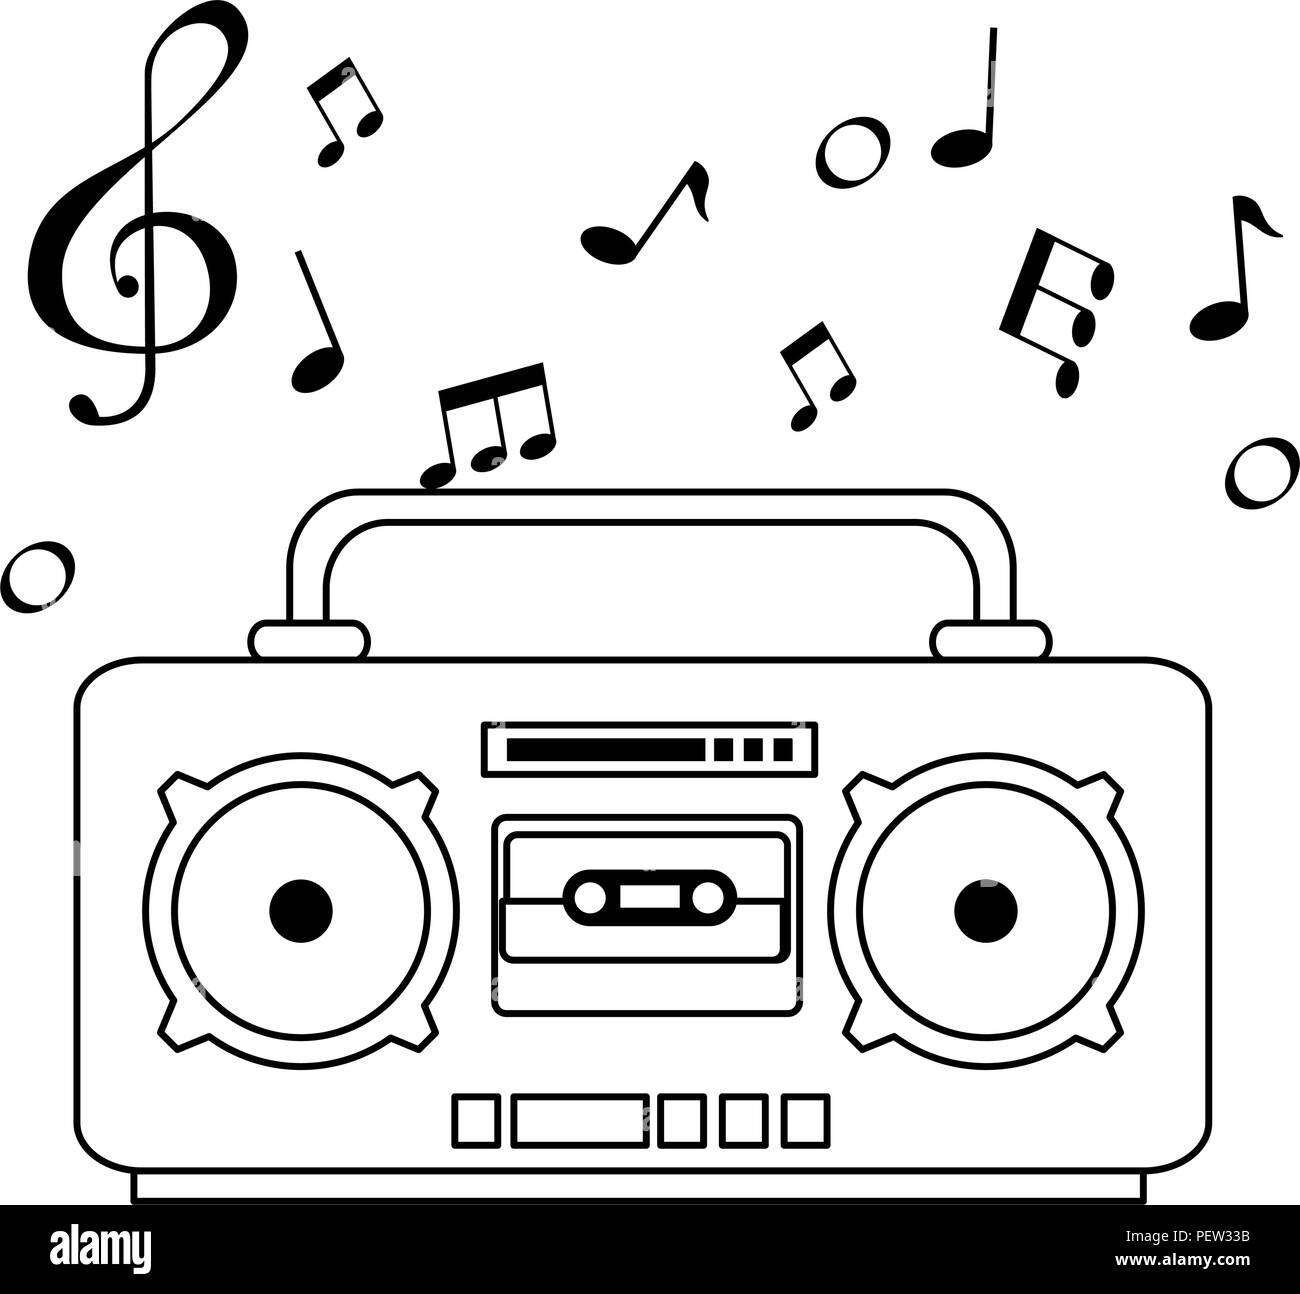 Radio Music Player mit Noten Vector Illustration Design Stock-Vektorgrafik  - Alamy